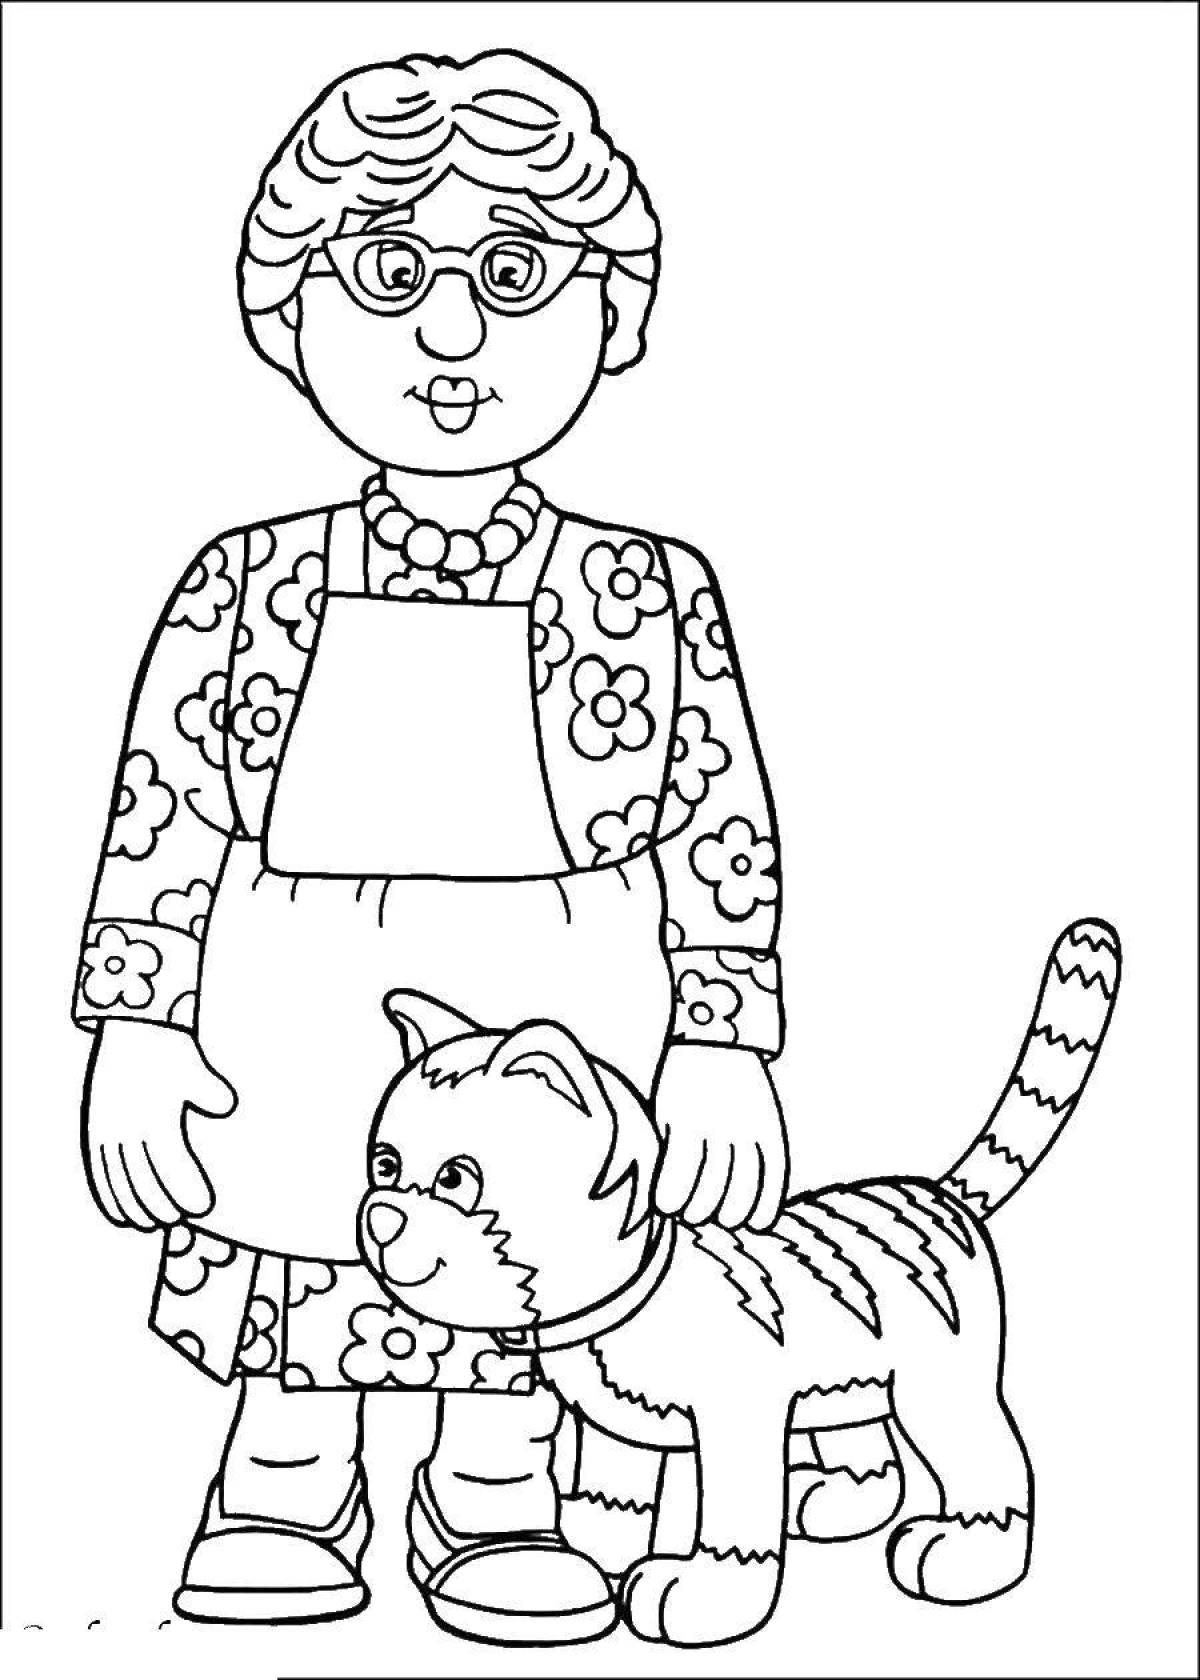 Grandma with a cat